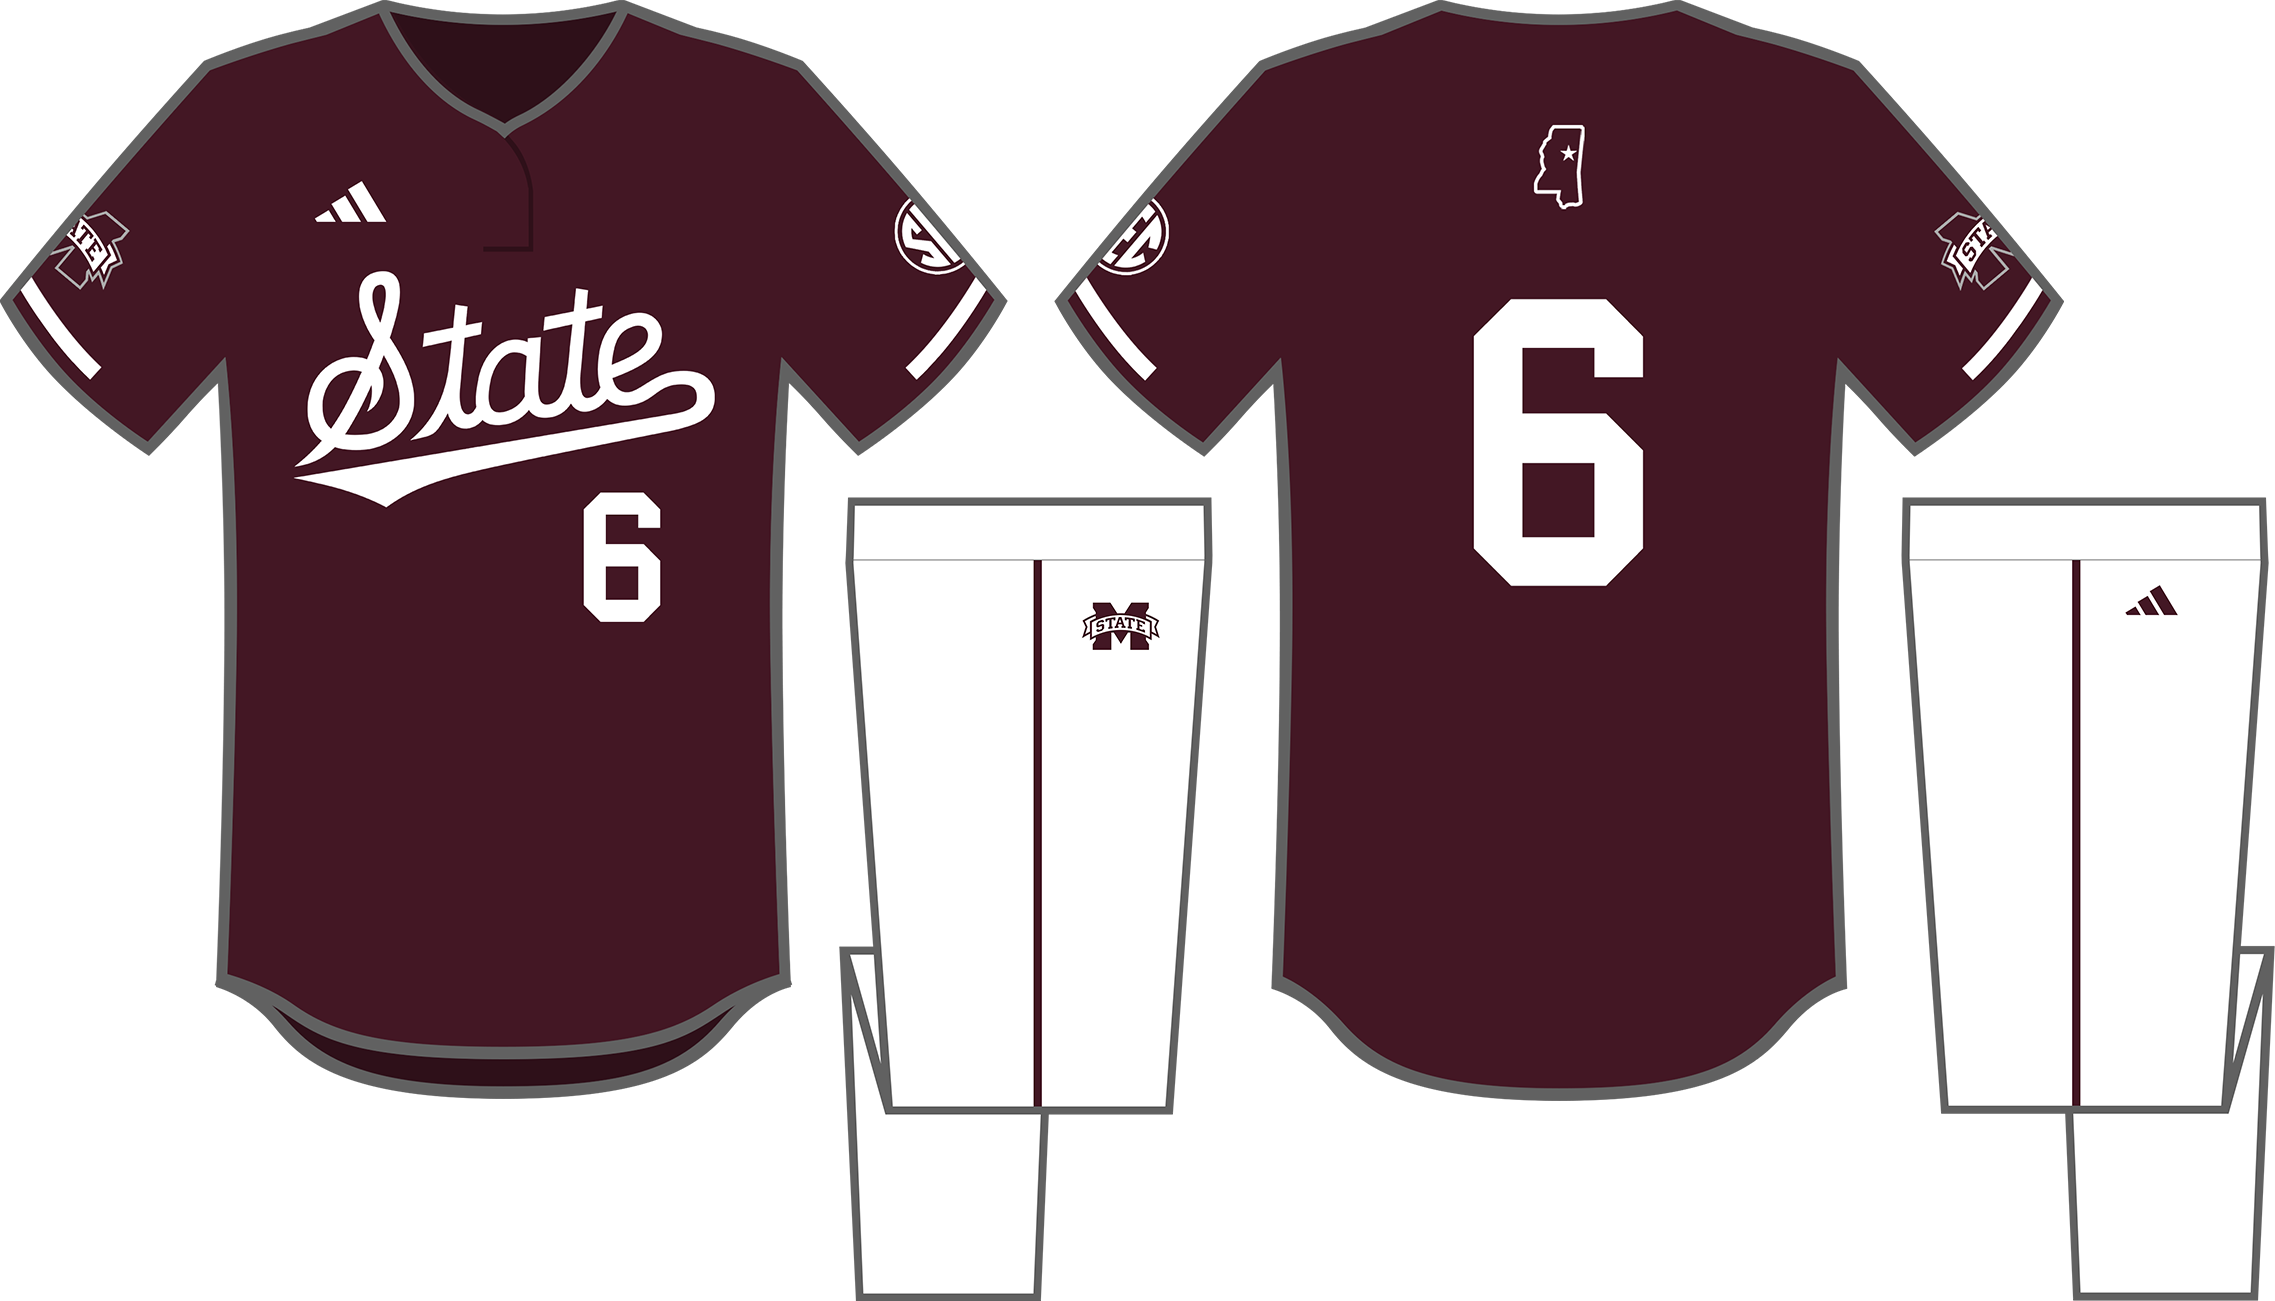 fastpitch uniform and logo design